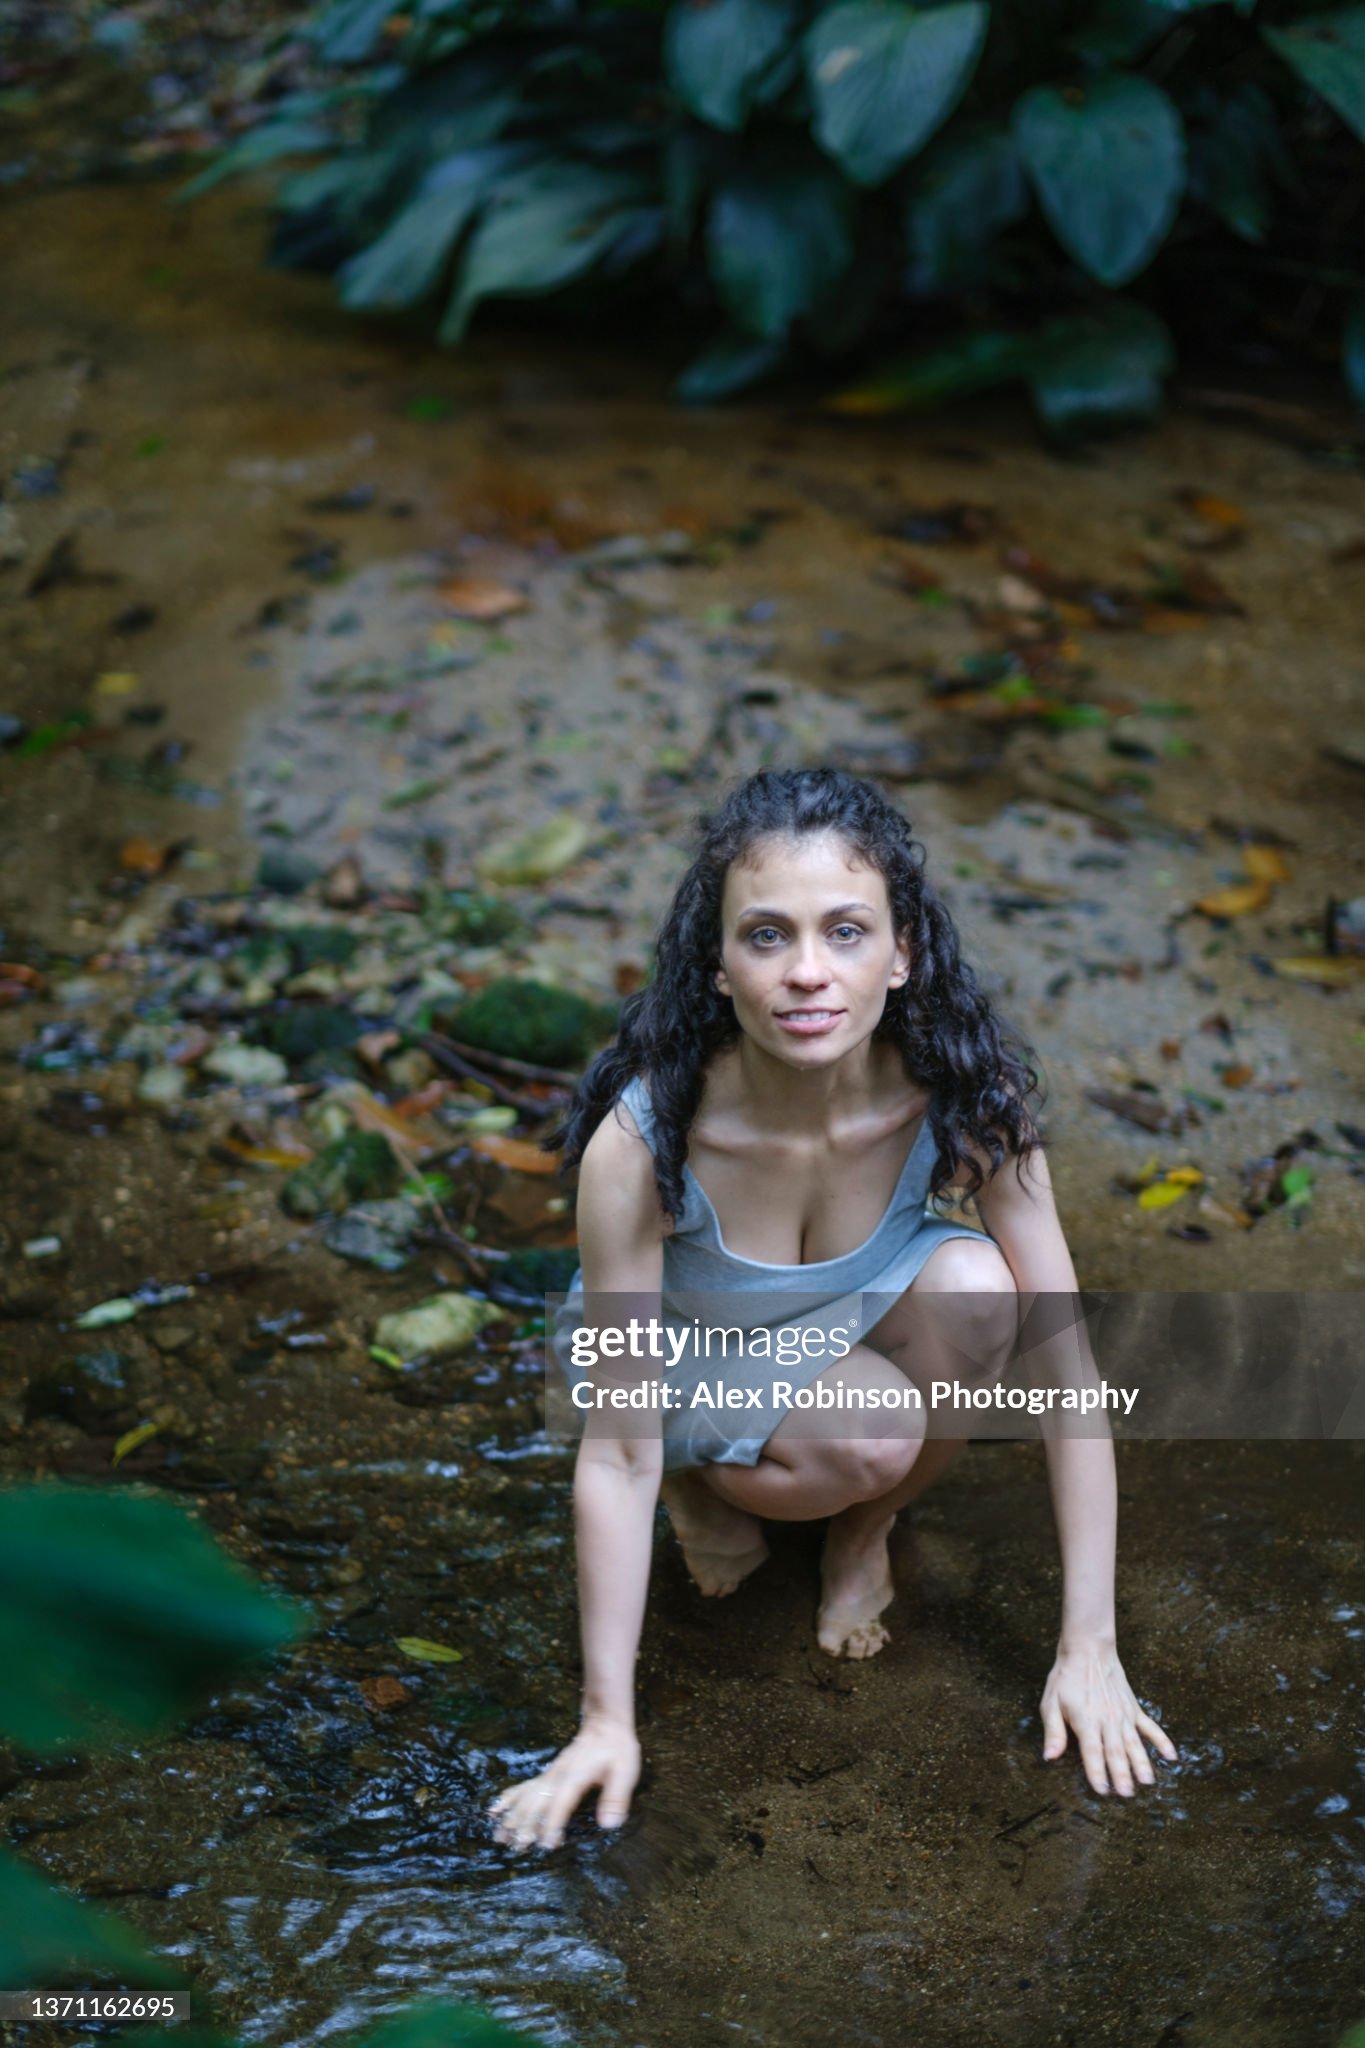 https://media.gettyimages.com/id/1371162695/photo/brunette-woman-in-a-white-dress-washing-her-face-in-a-rainforest-stream.jpg?s=2048x2048&amp;w=gi&amp;k=20&amp;c=ZDdt7gmOjLgxNZF1M7ZxfSeNdwuRKL171tU-Y2fXcOg=